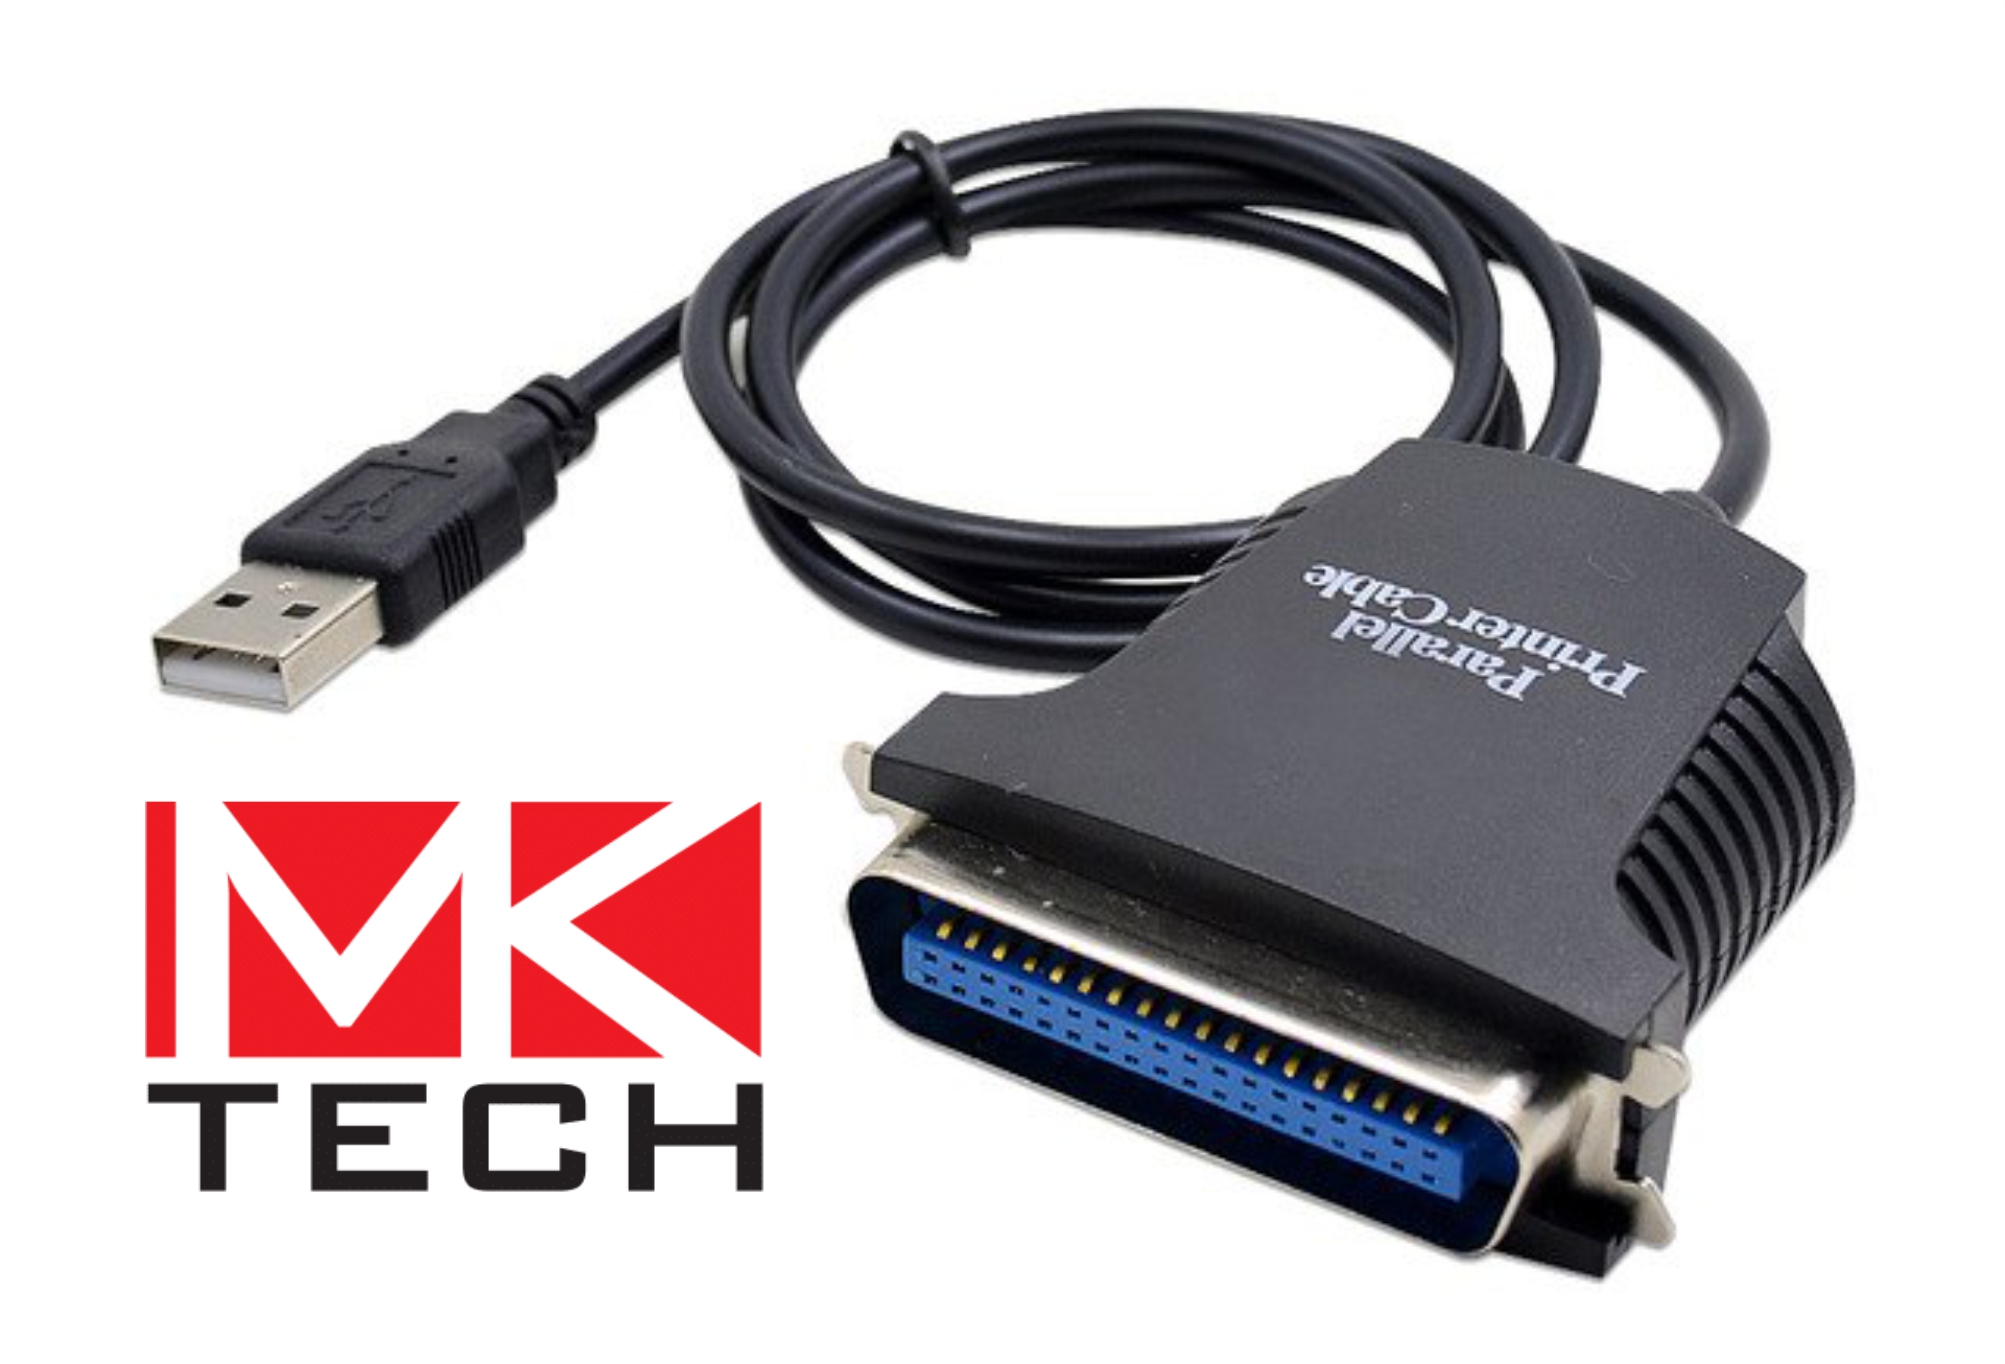 USB2.0 to IEEE-1284 Parallel Adapter MKTECH